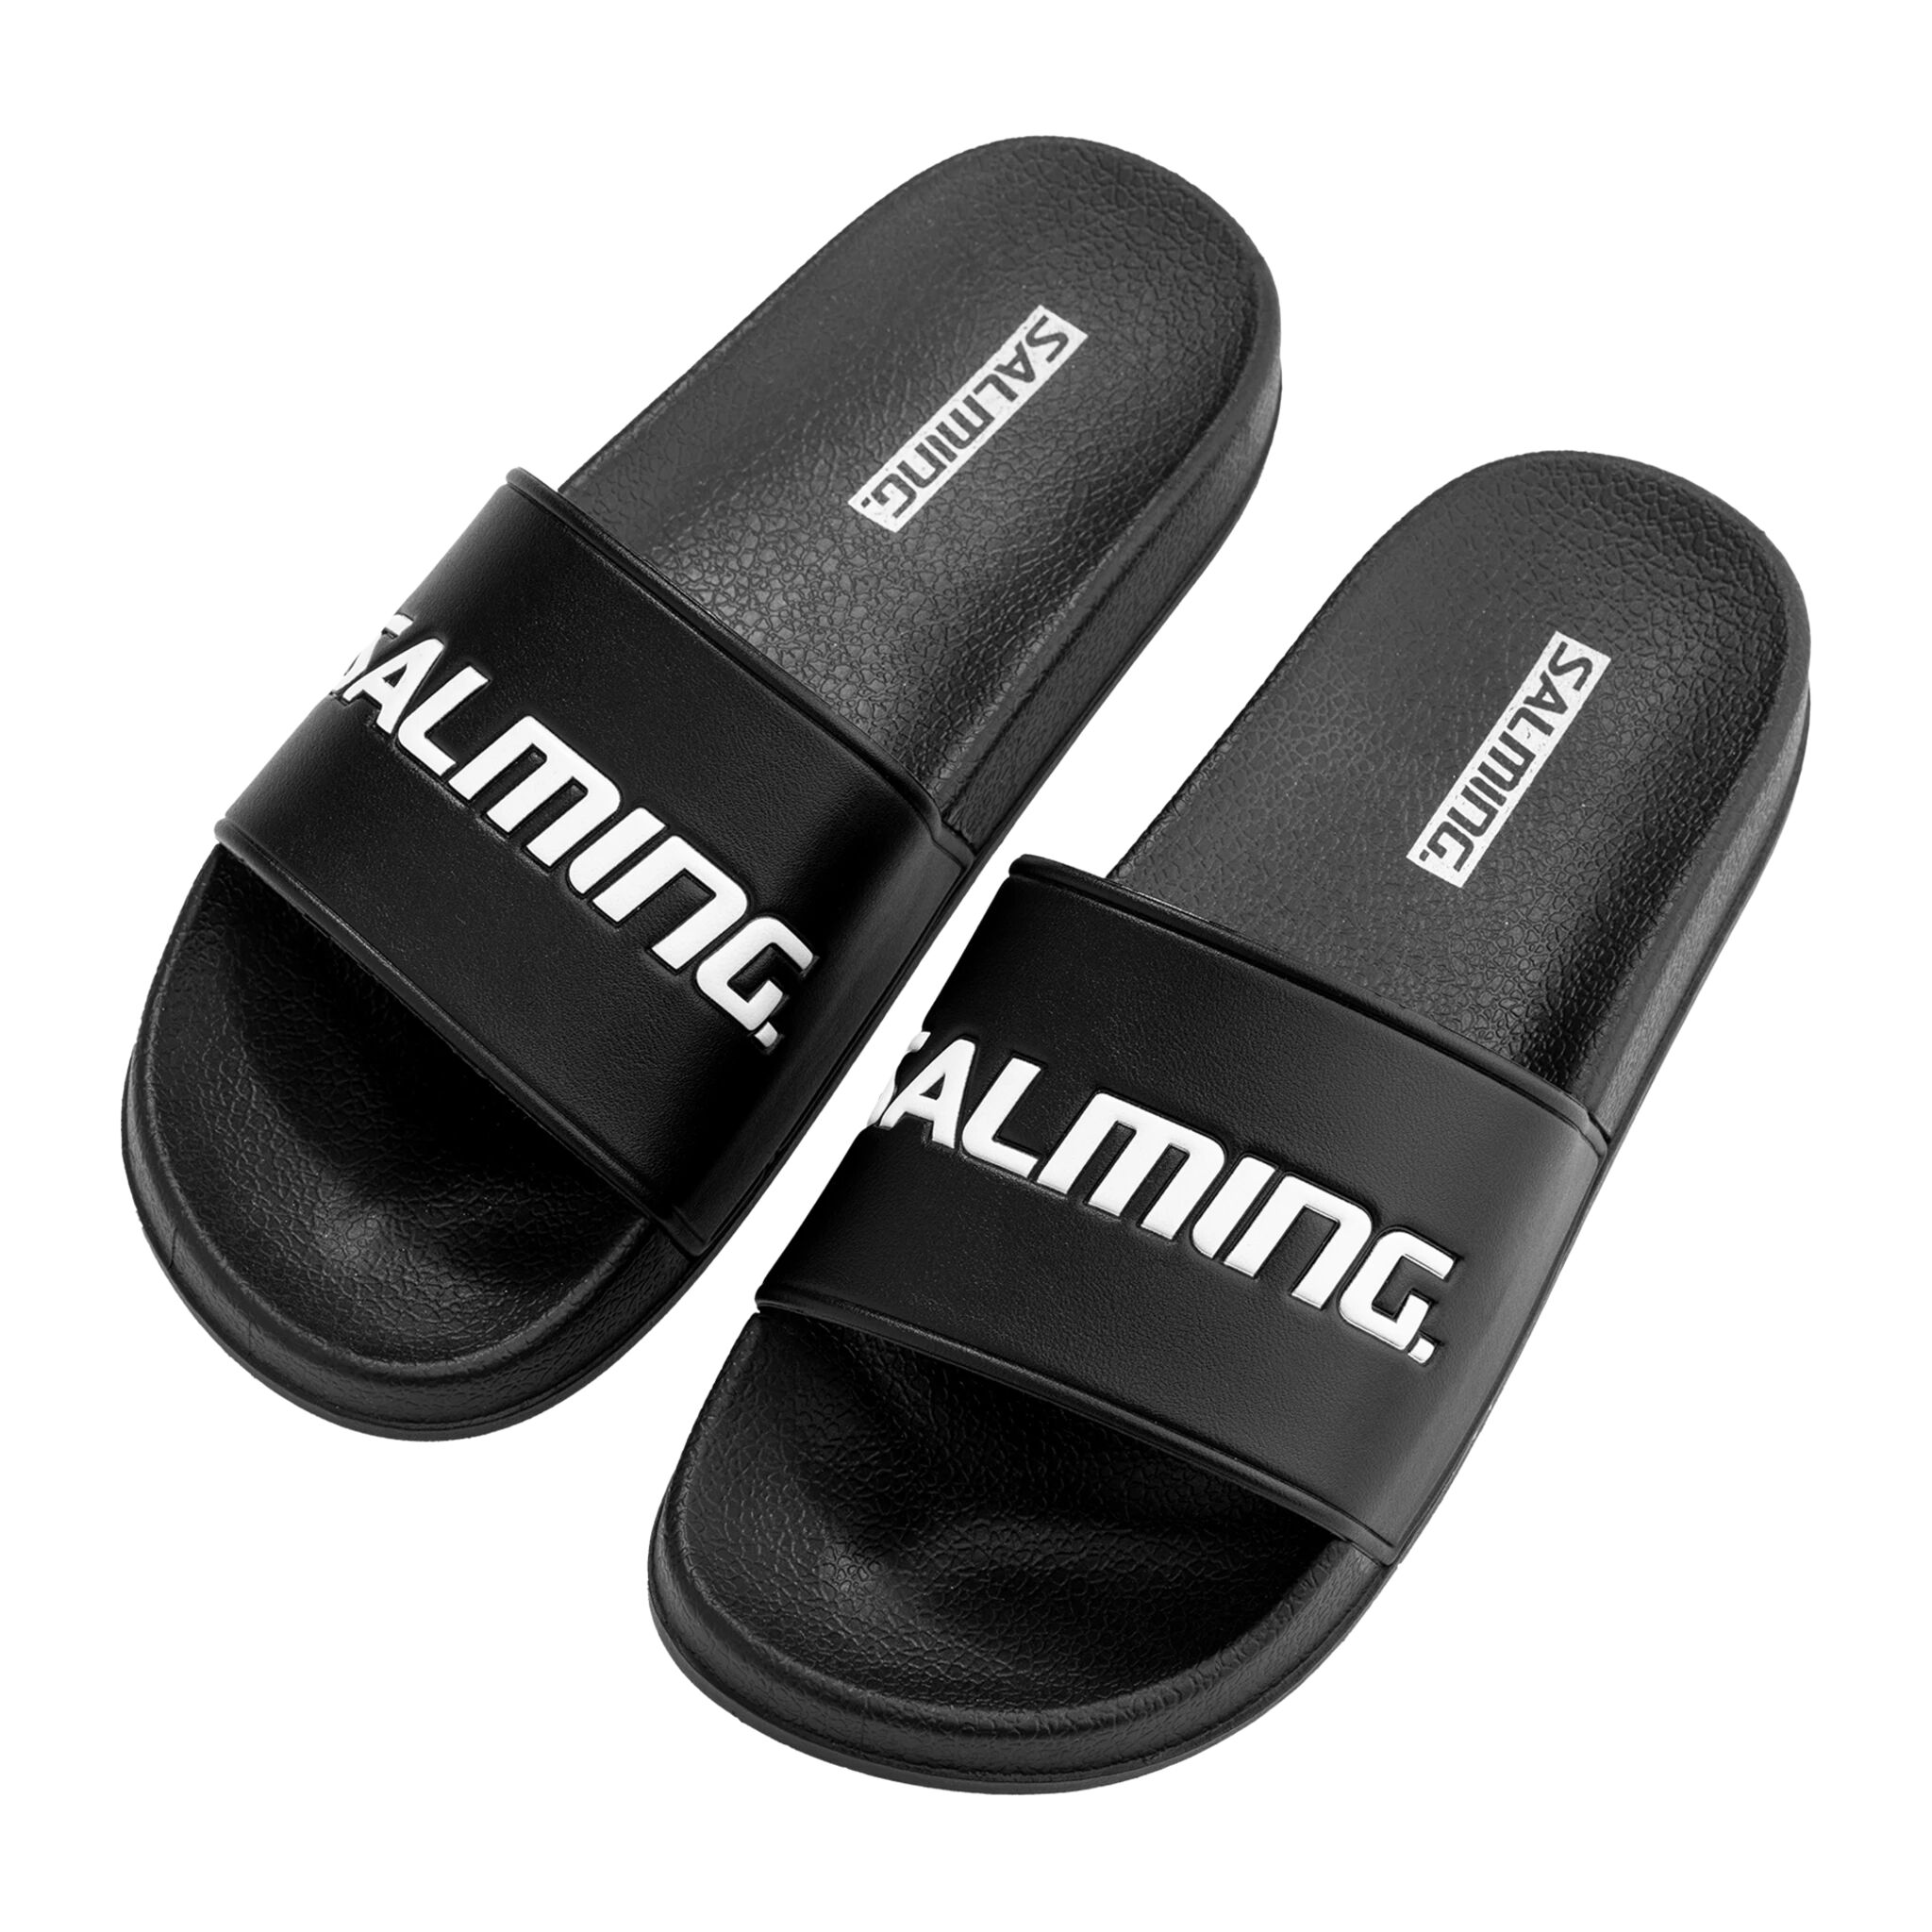 Salming Comfort Shower Sandal JR/SR-21/22, slippers 38/39 BLACK